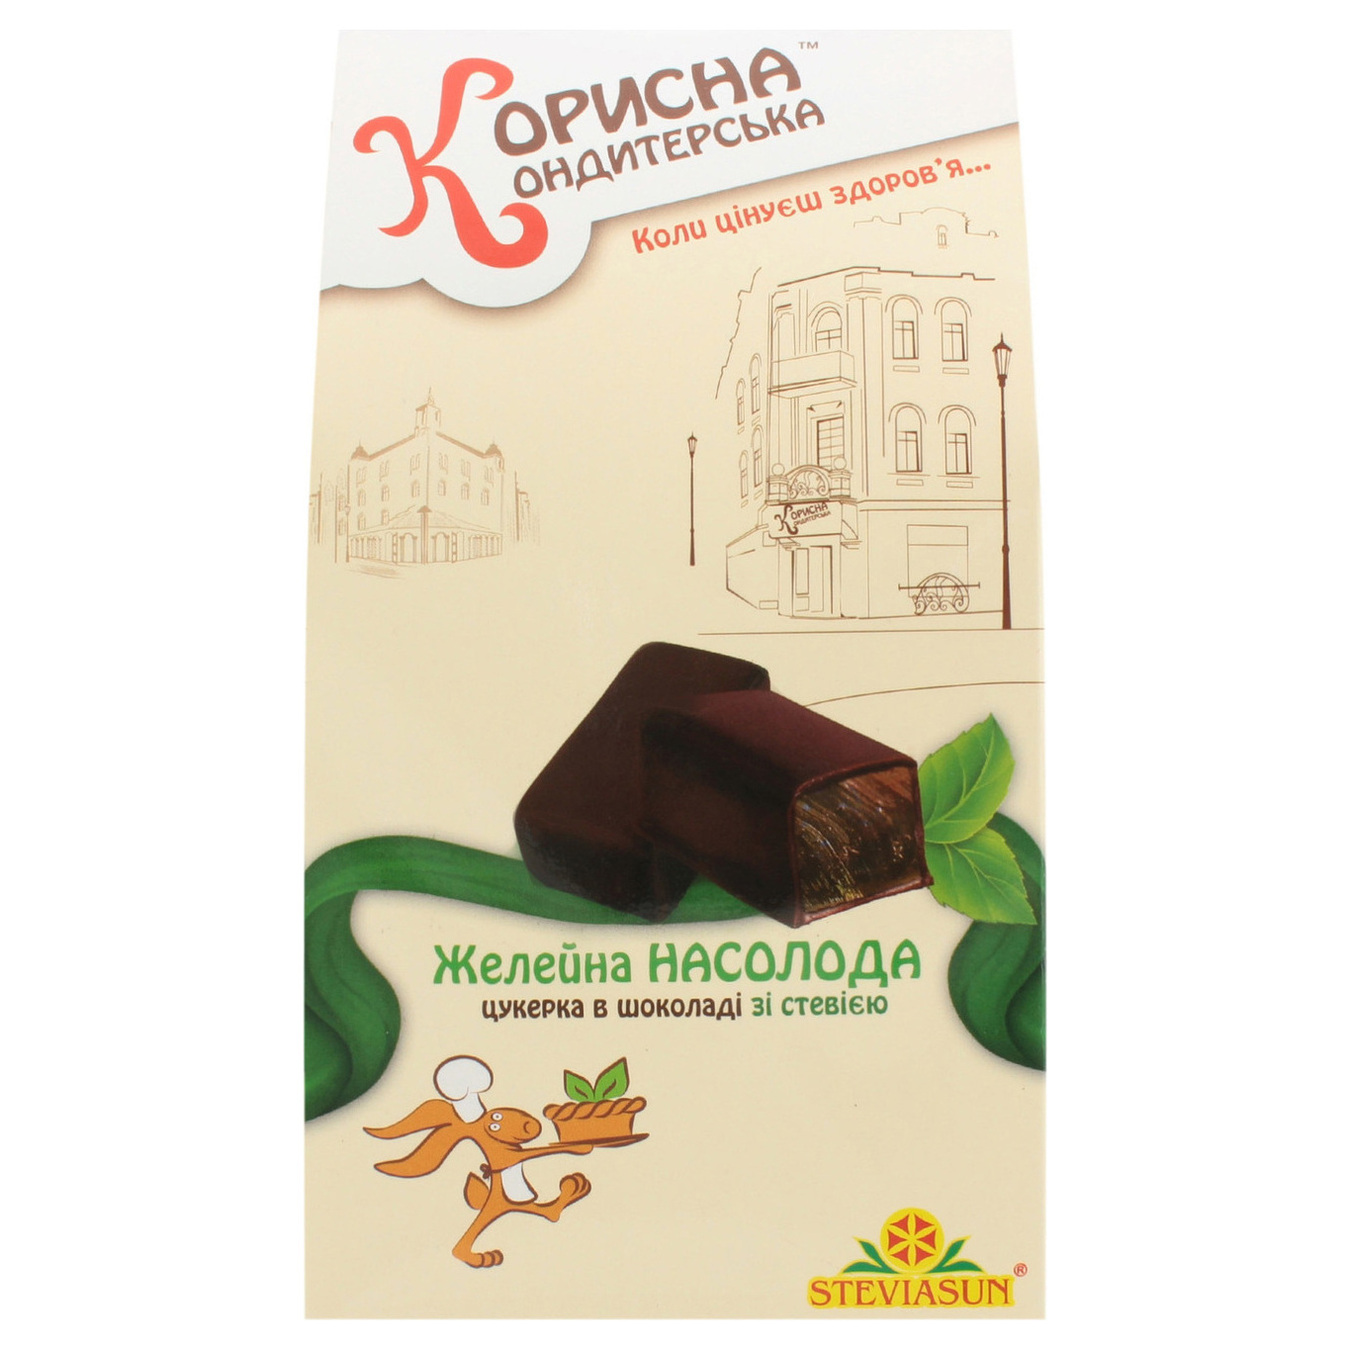 Candies Korysna Kondyterska Steviyasan jelly delight in chocolate 150g